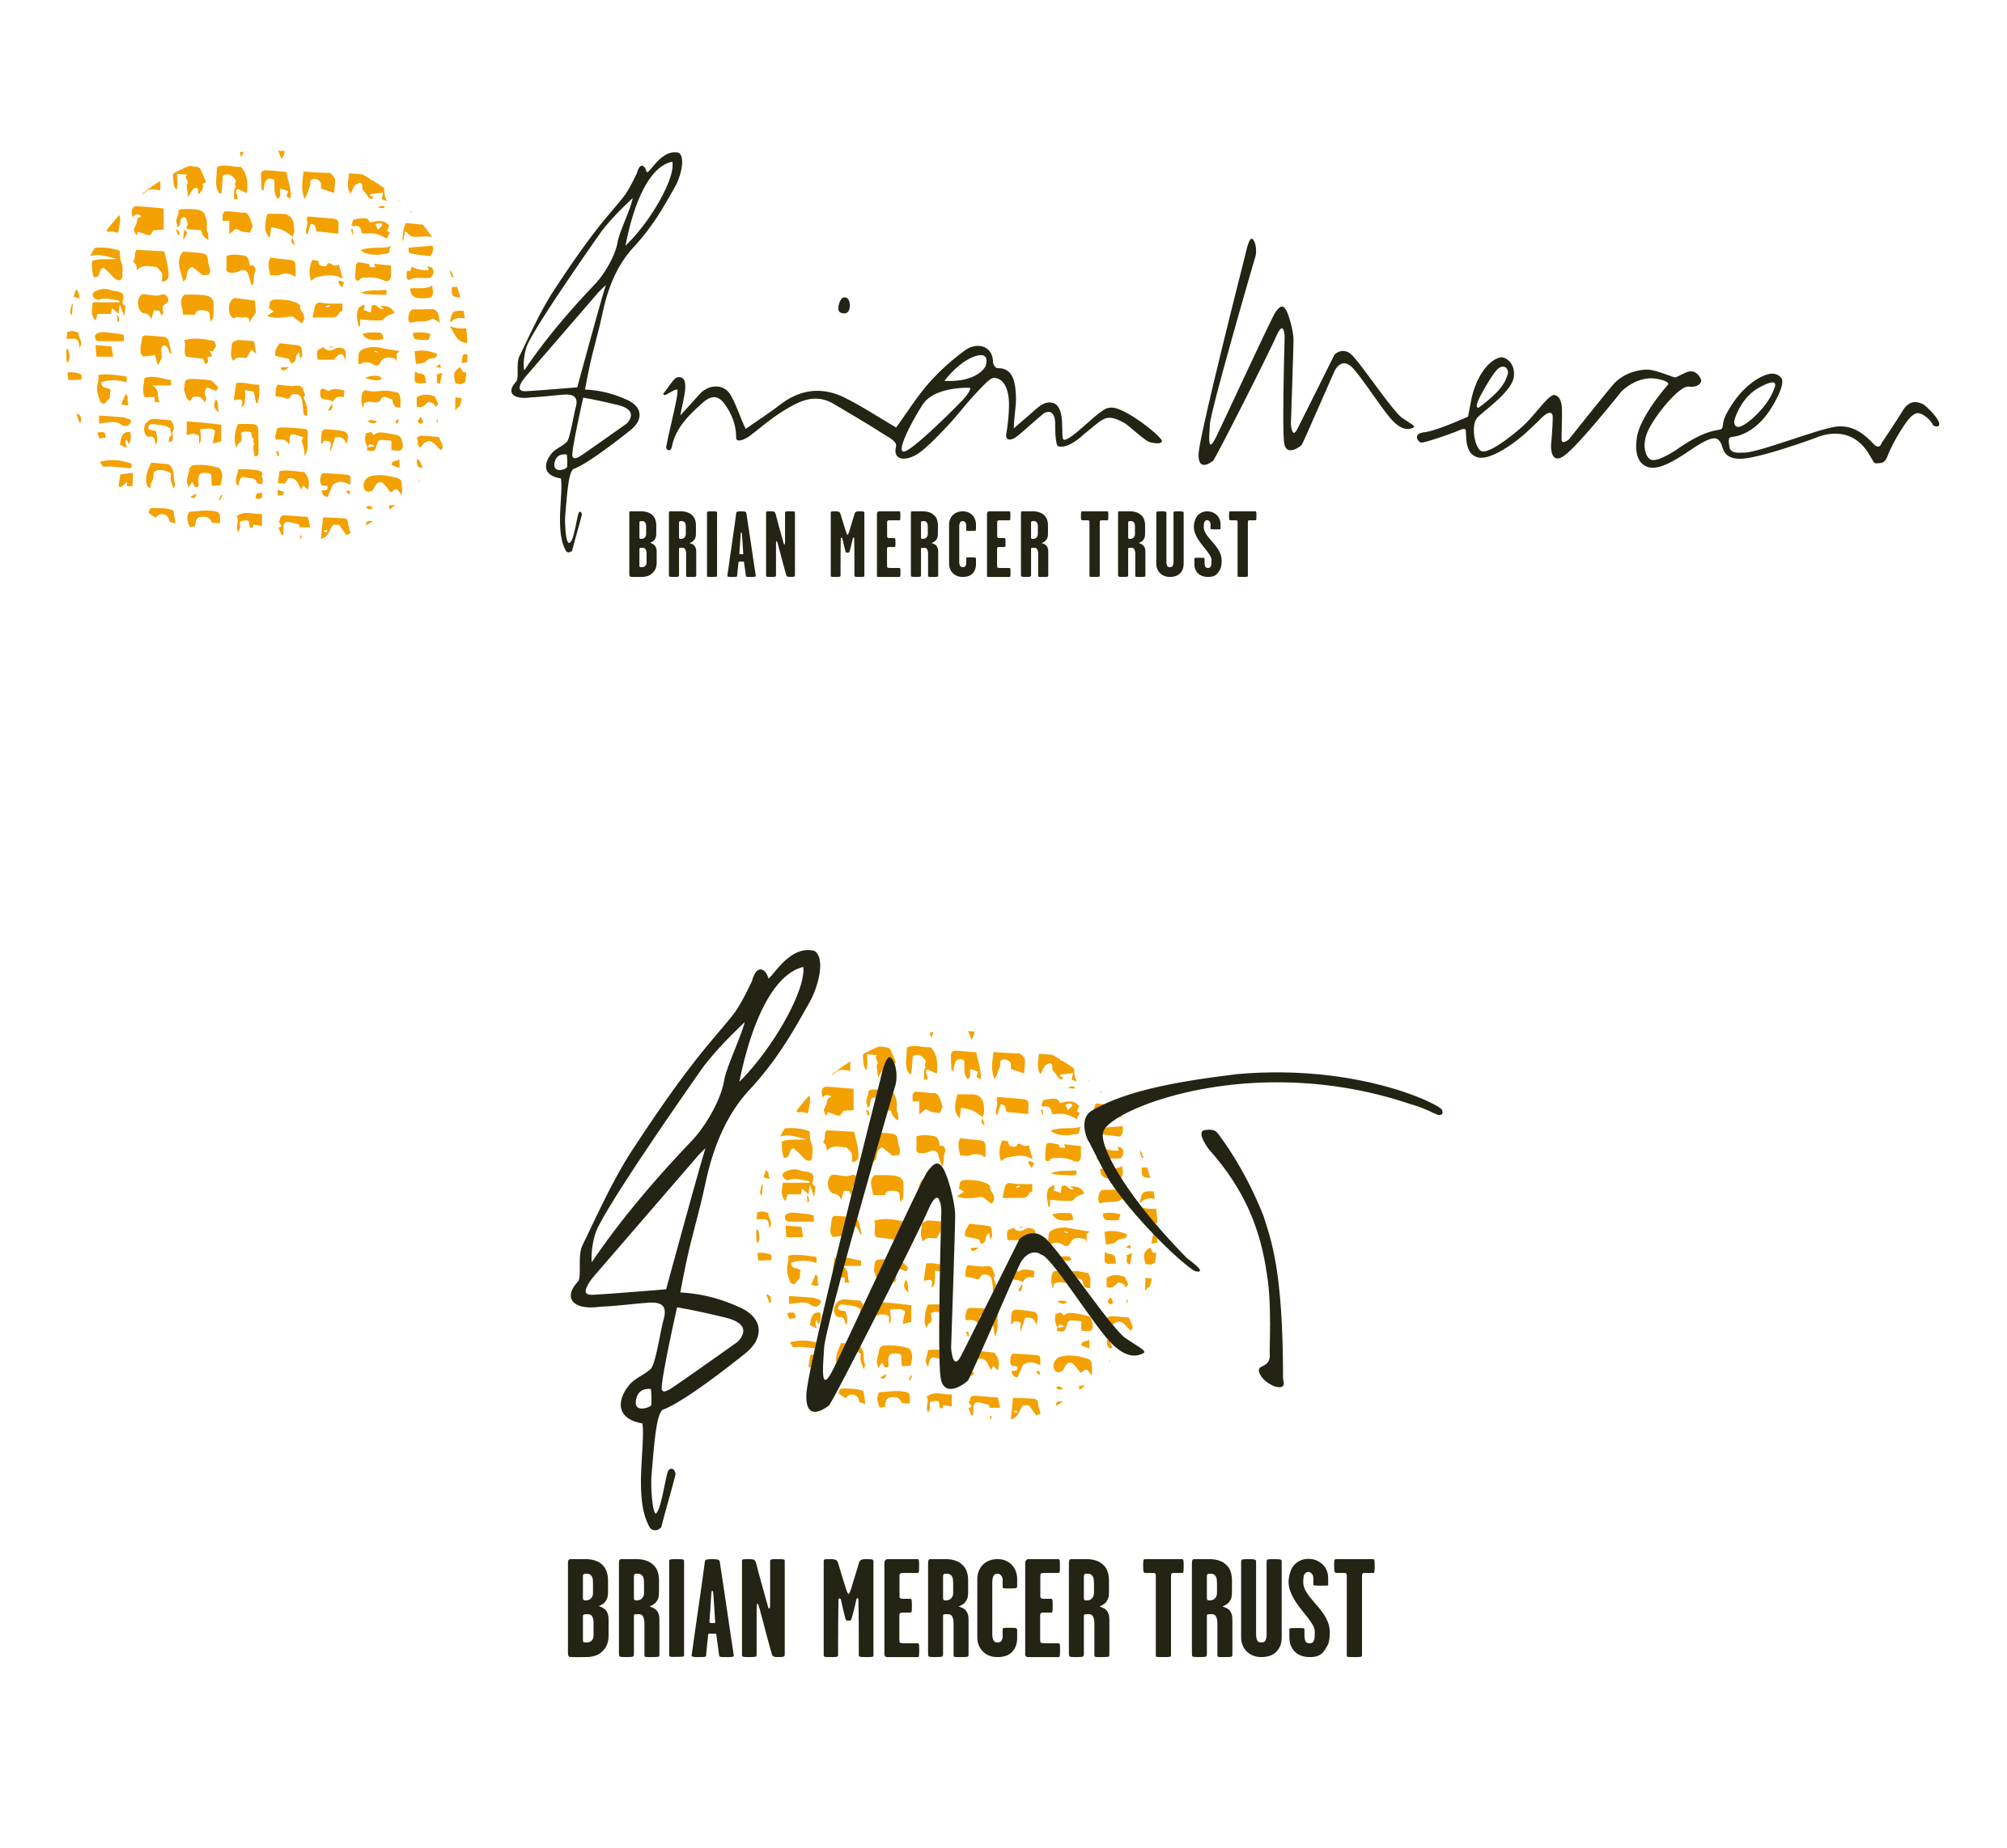 Brian Mercer Trust